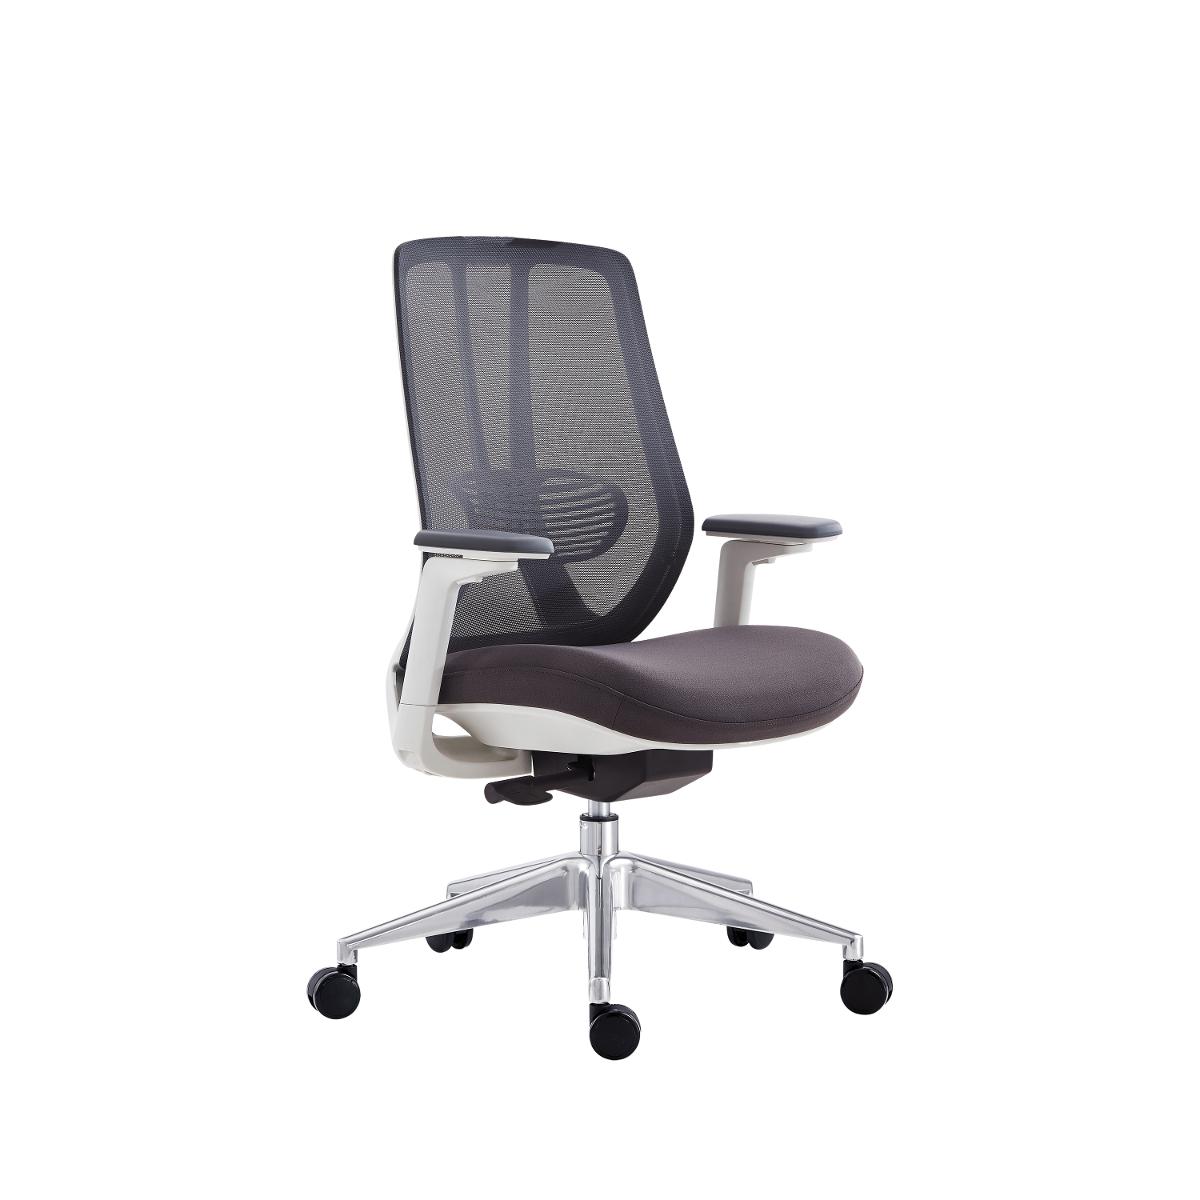 Super Chair เก้าอี้สำนักงาน รุ่น 7102-6 M White